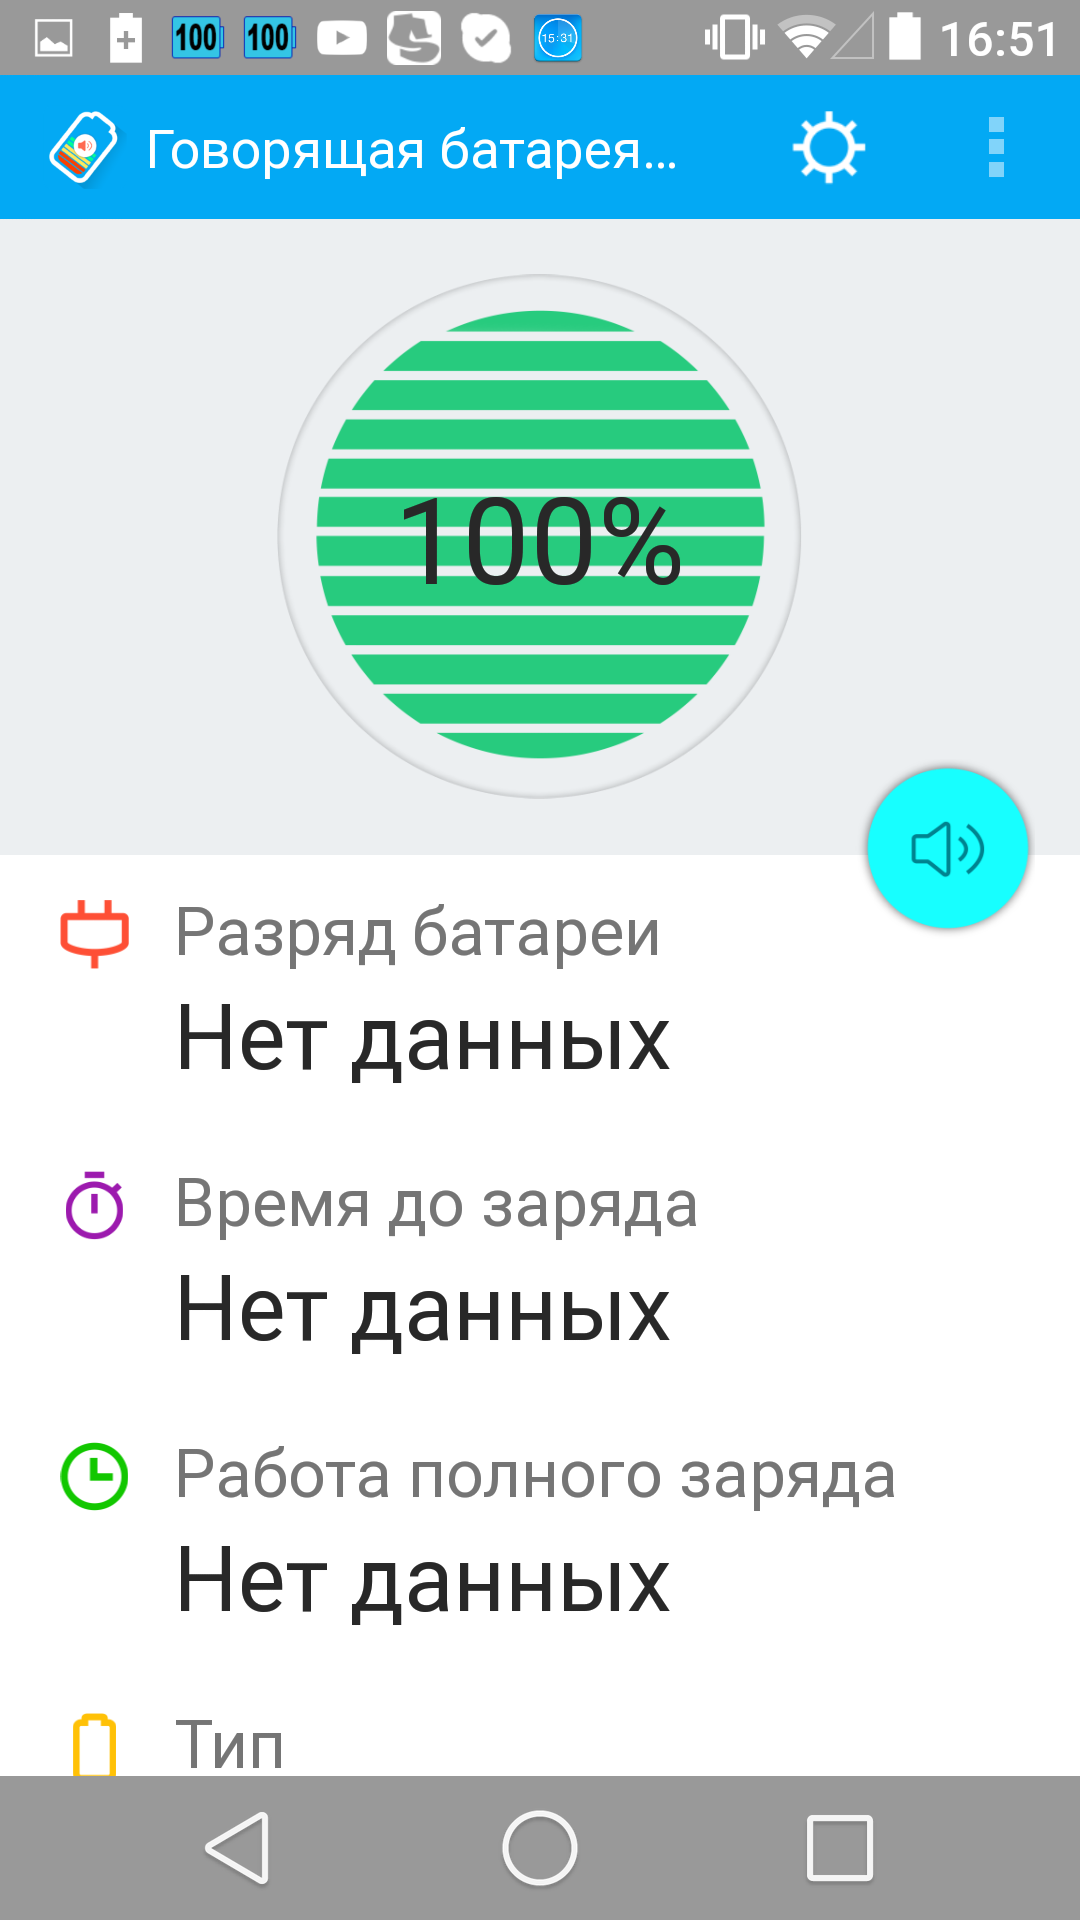 Android application Говорящая батарея Pro screenshort